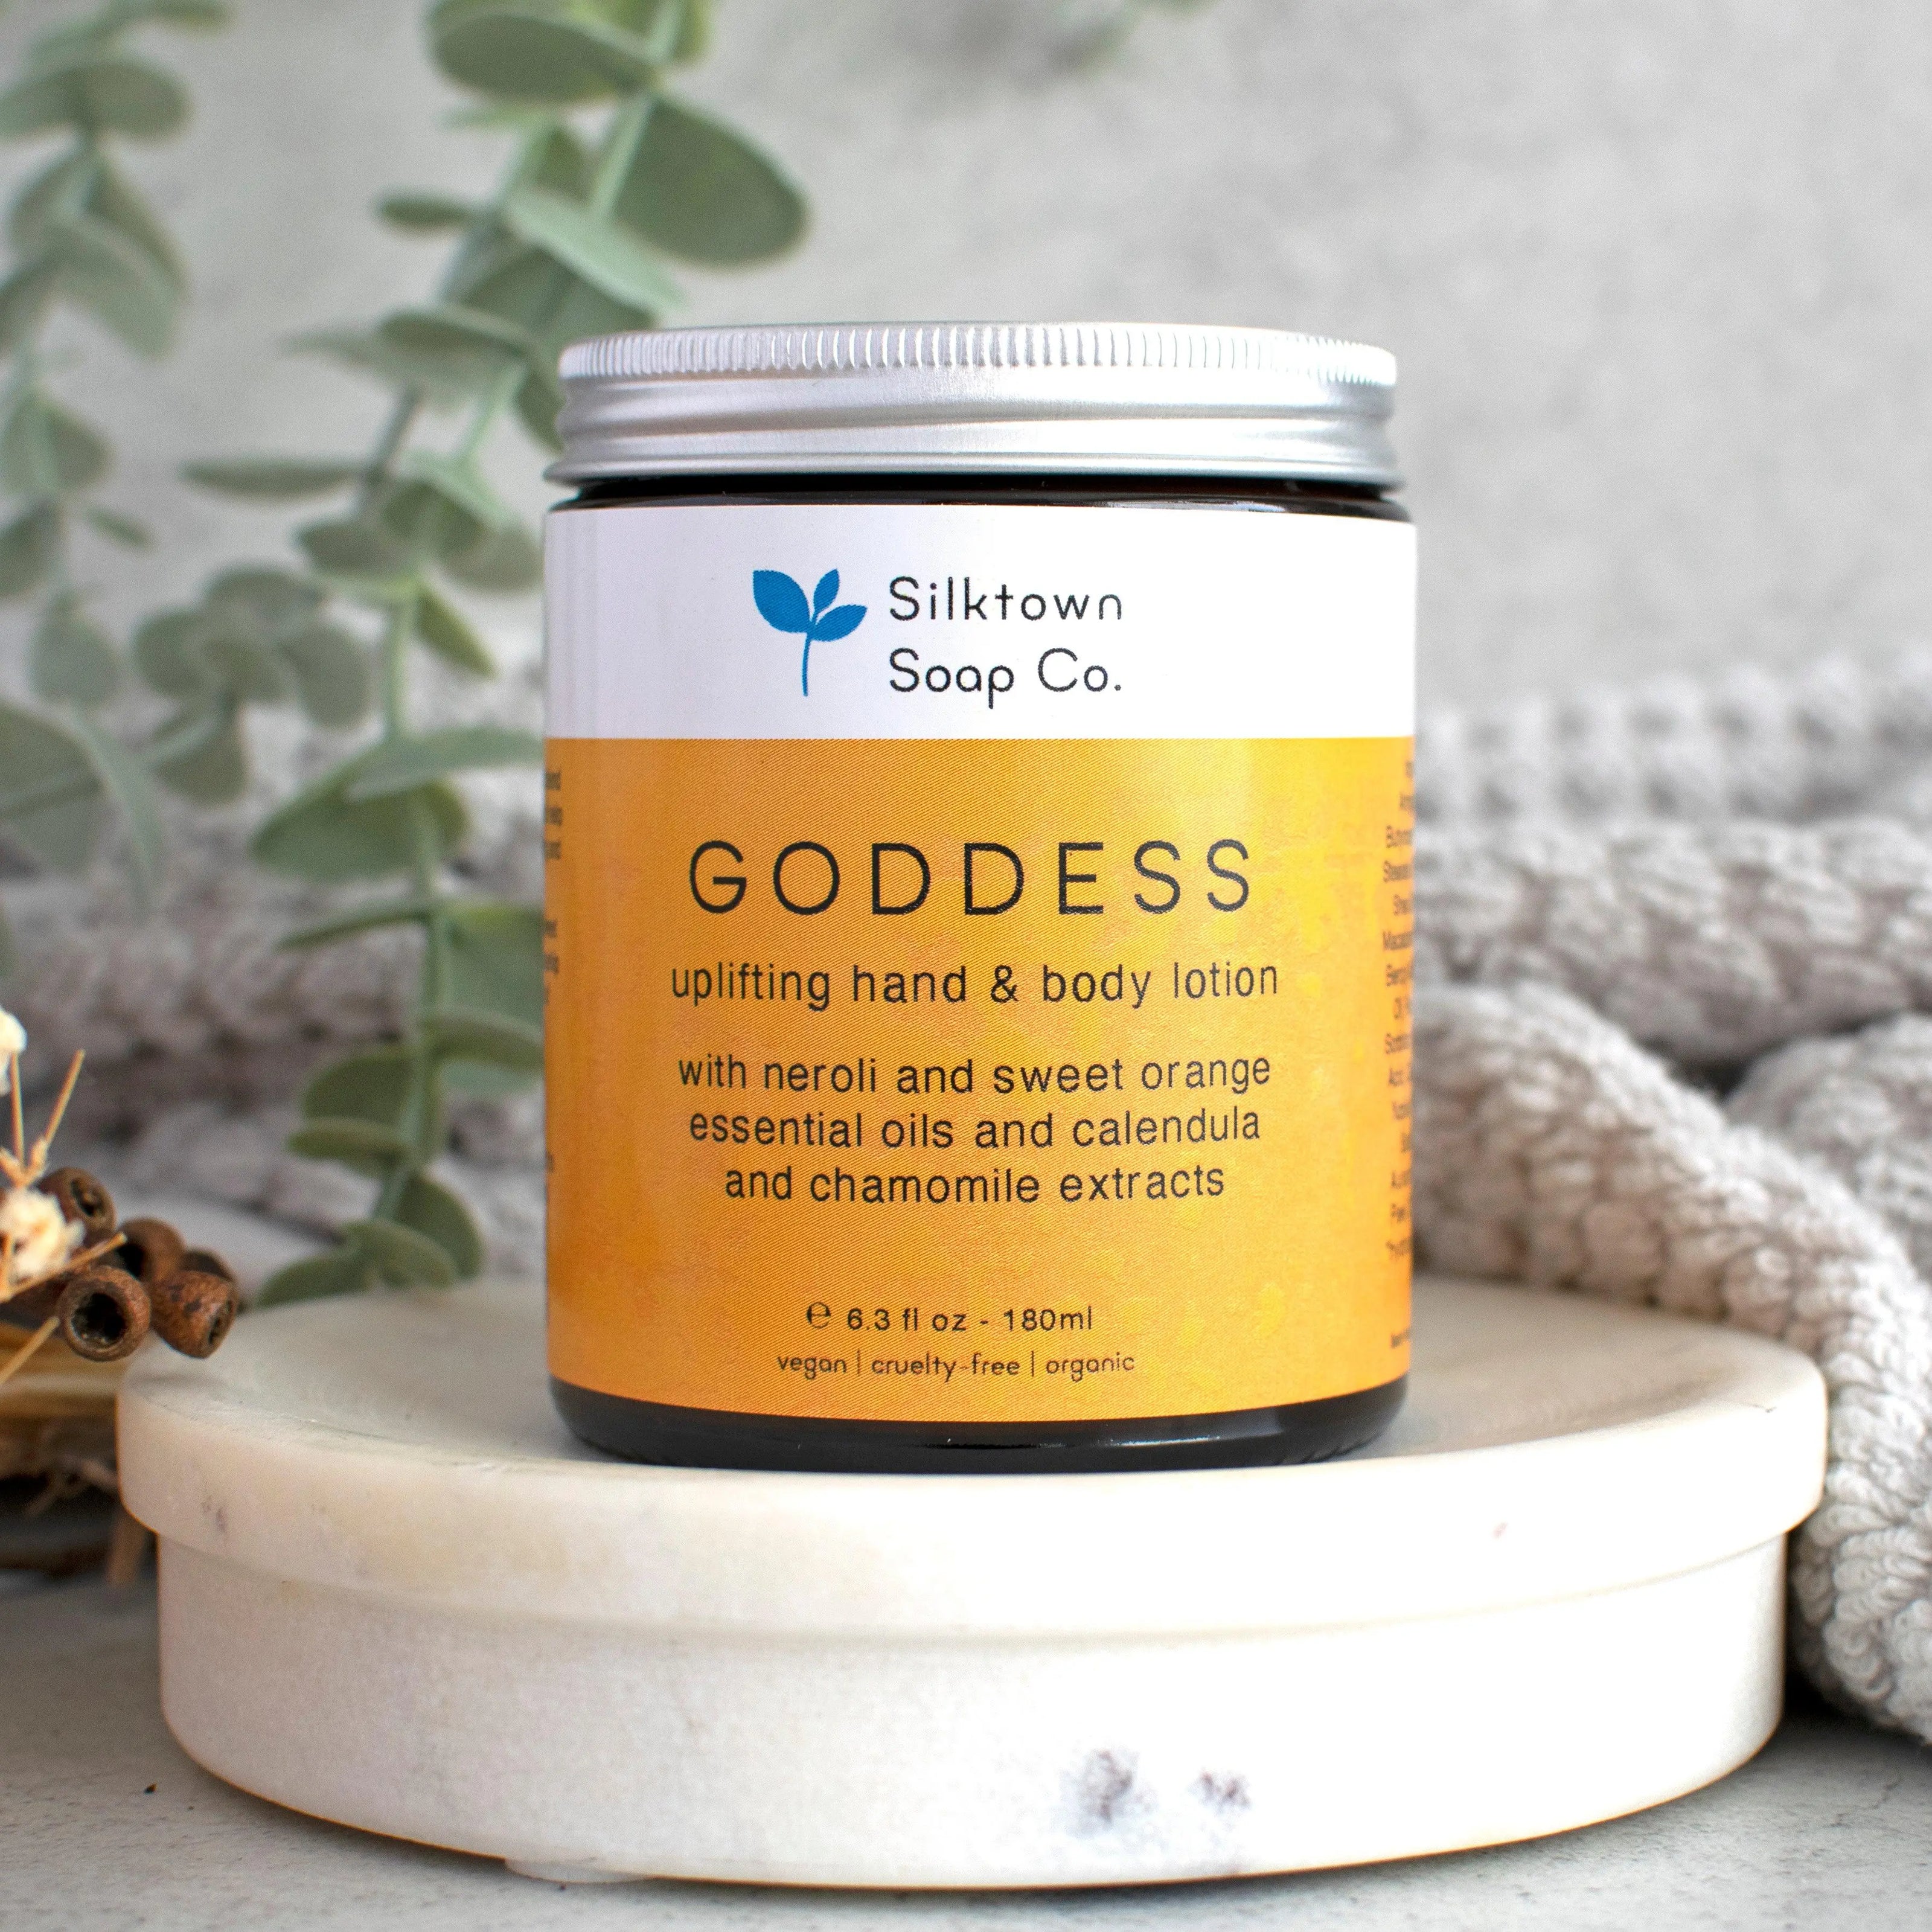 Goddess - Brightening Hand & Body Lotion - Silktown Soap Company 